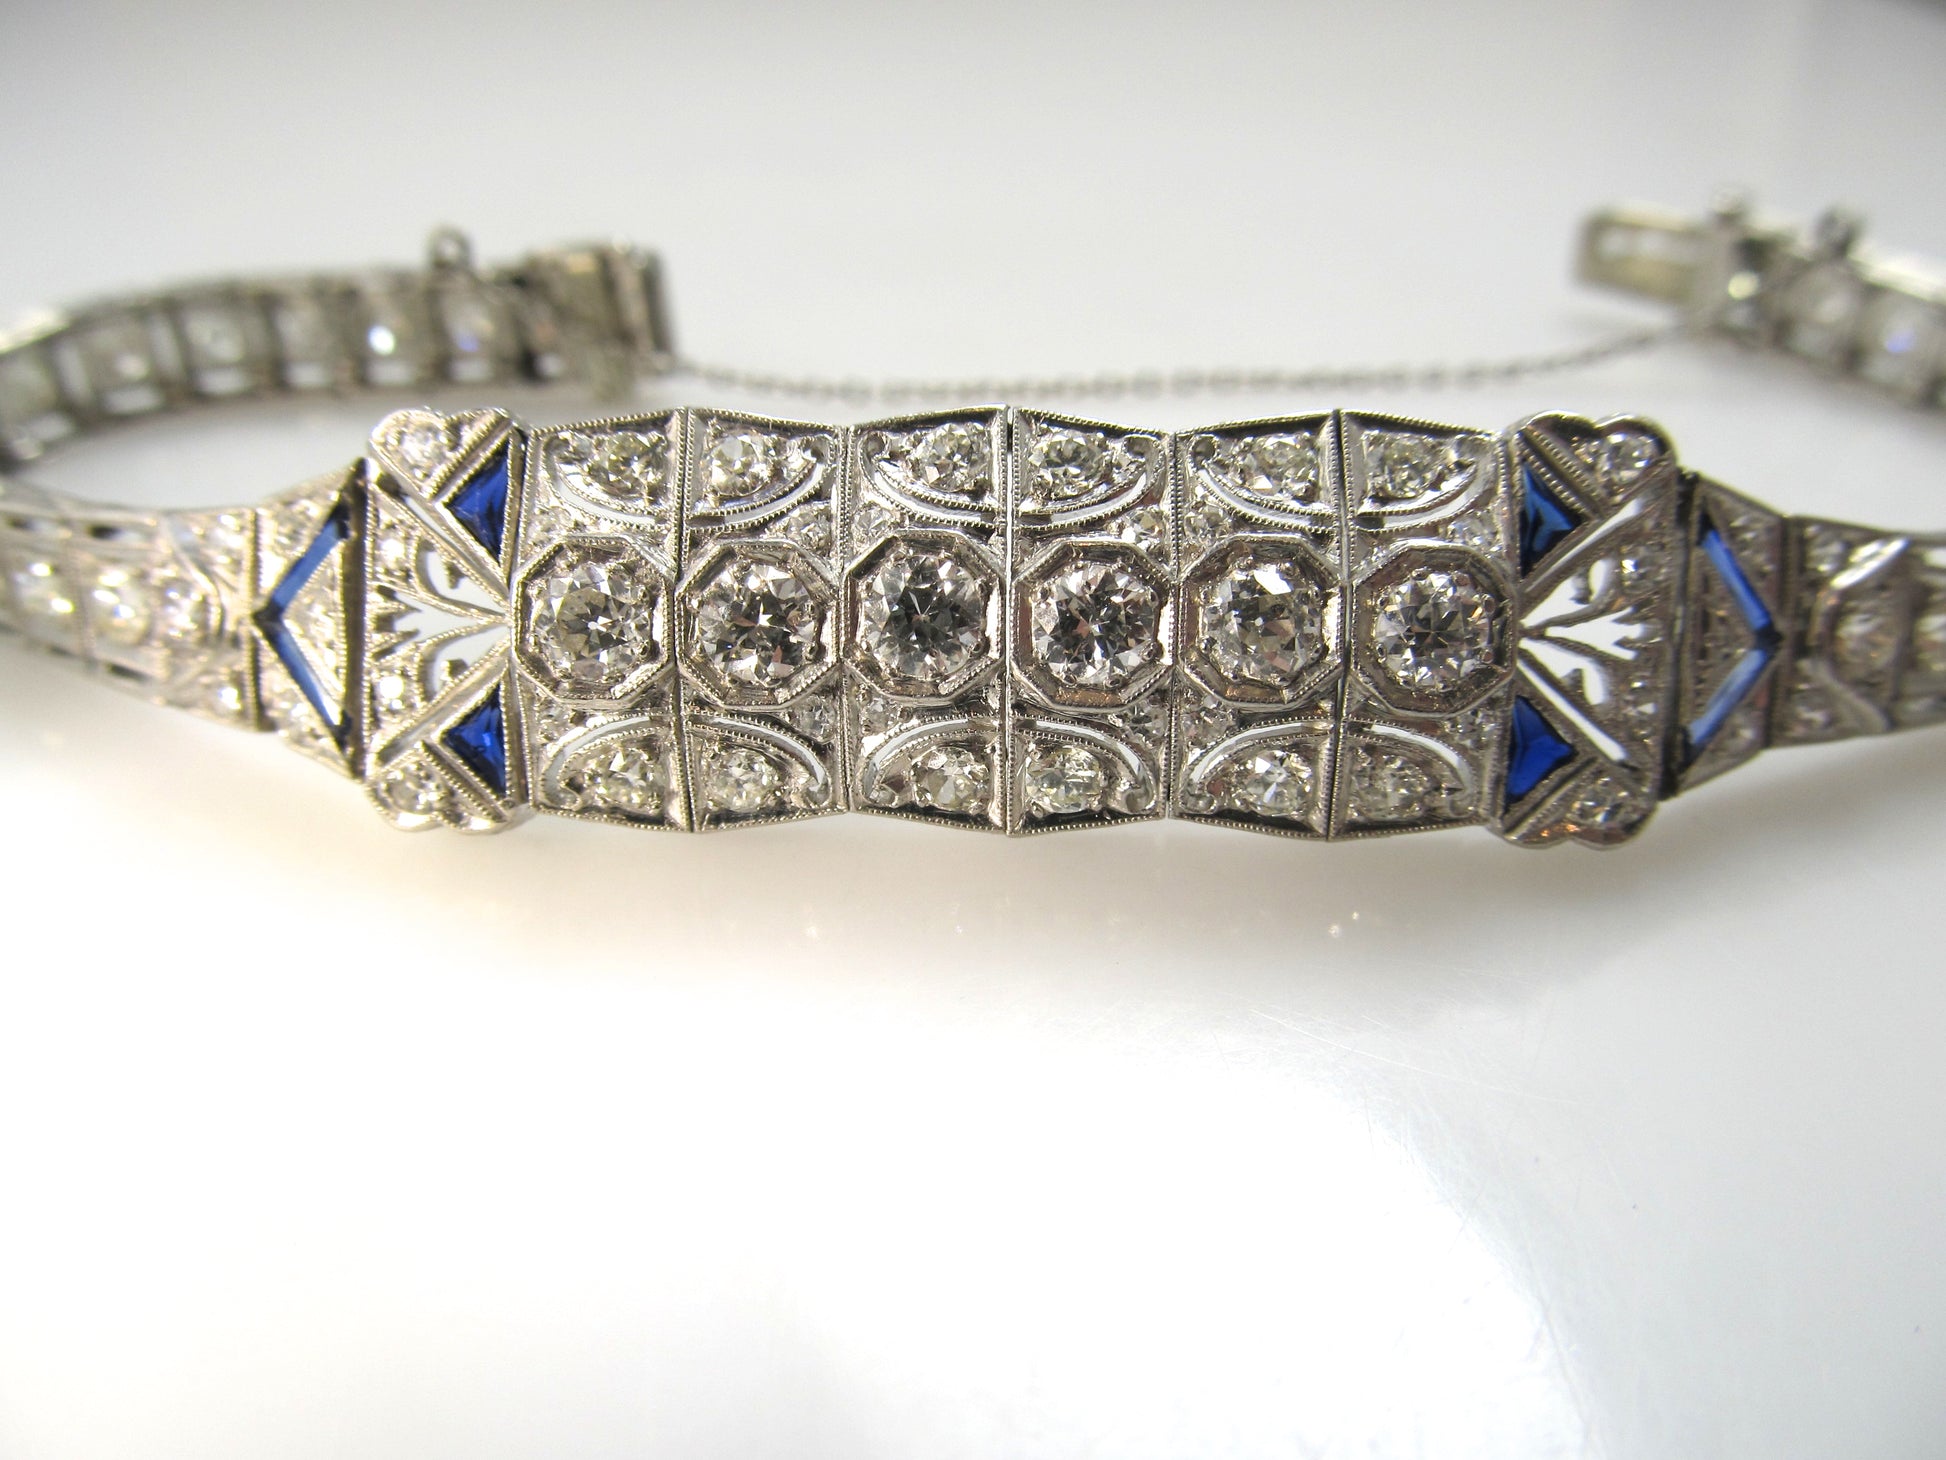 Antique platinum and diamond bracelet, Victorious Cape may